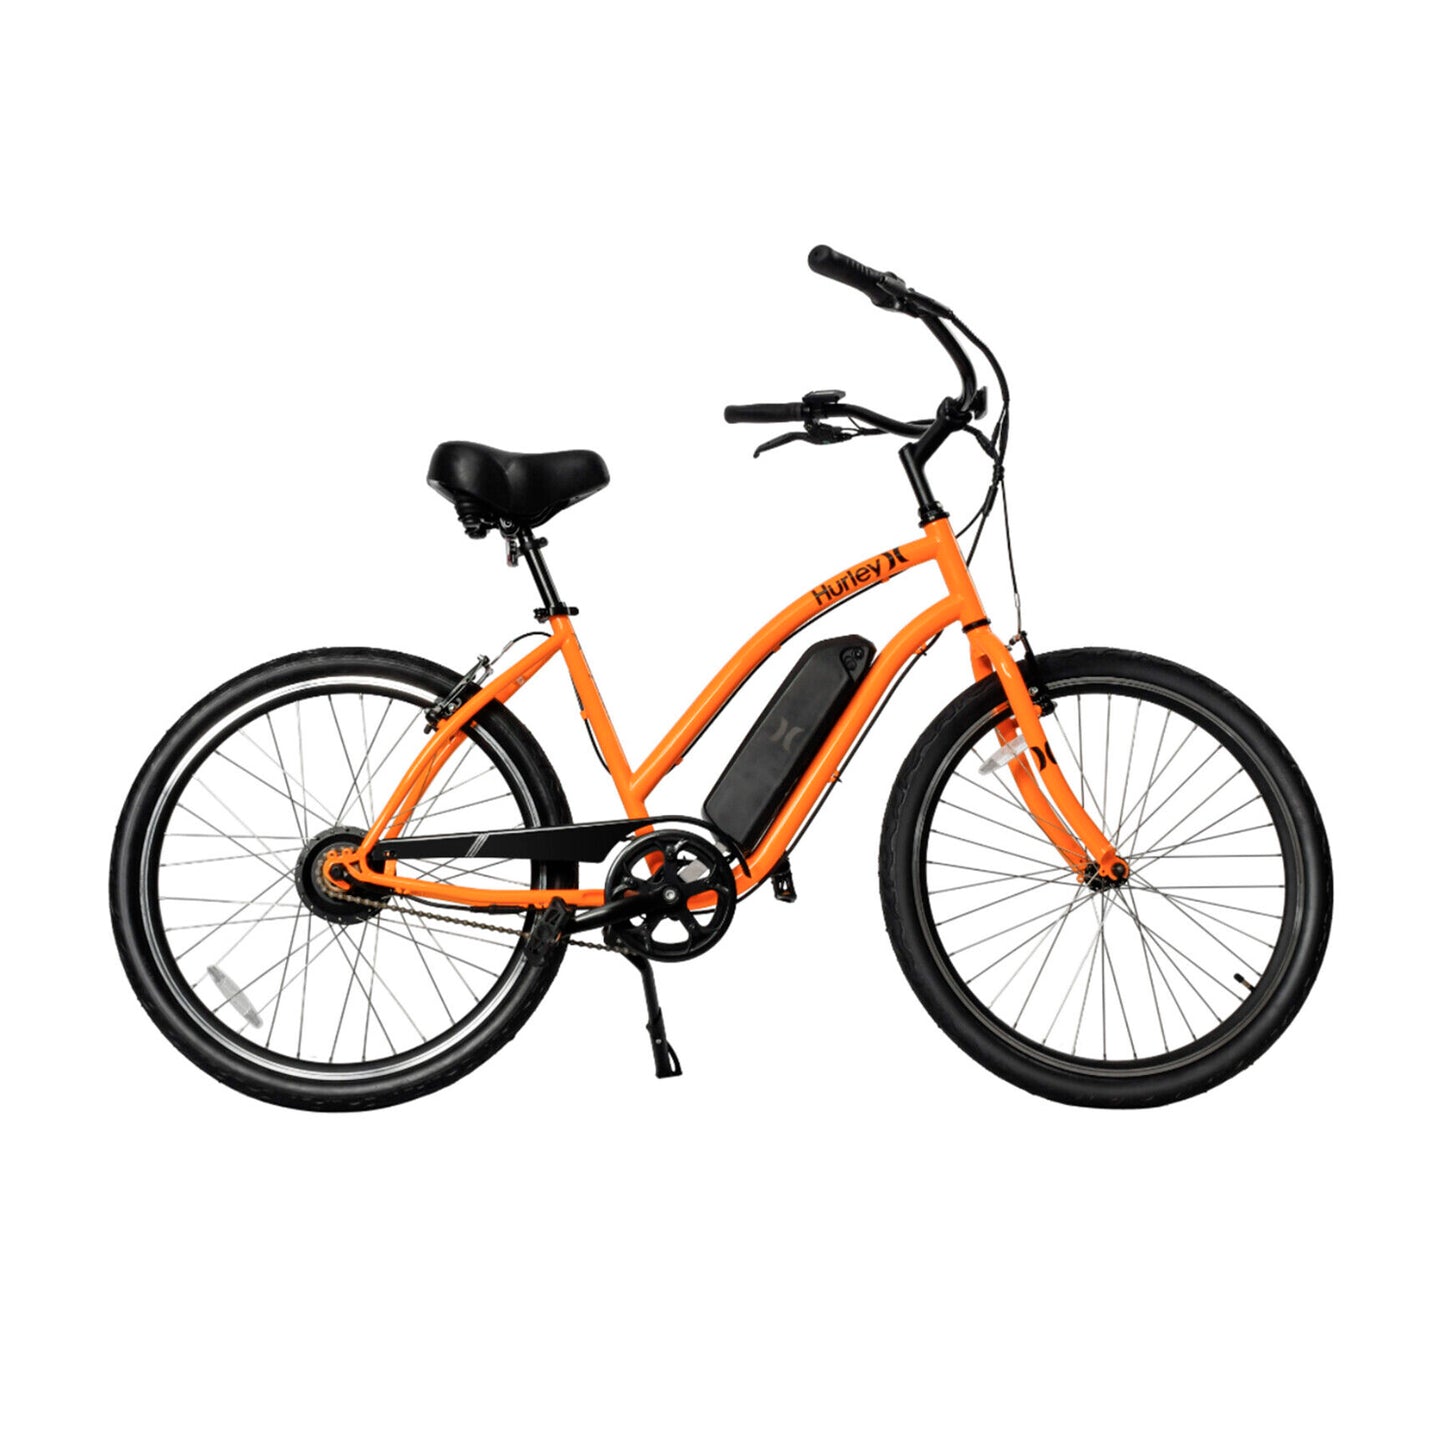 Bicicleta eléctrica hurley E-bike rodada 26, naranja